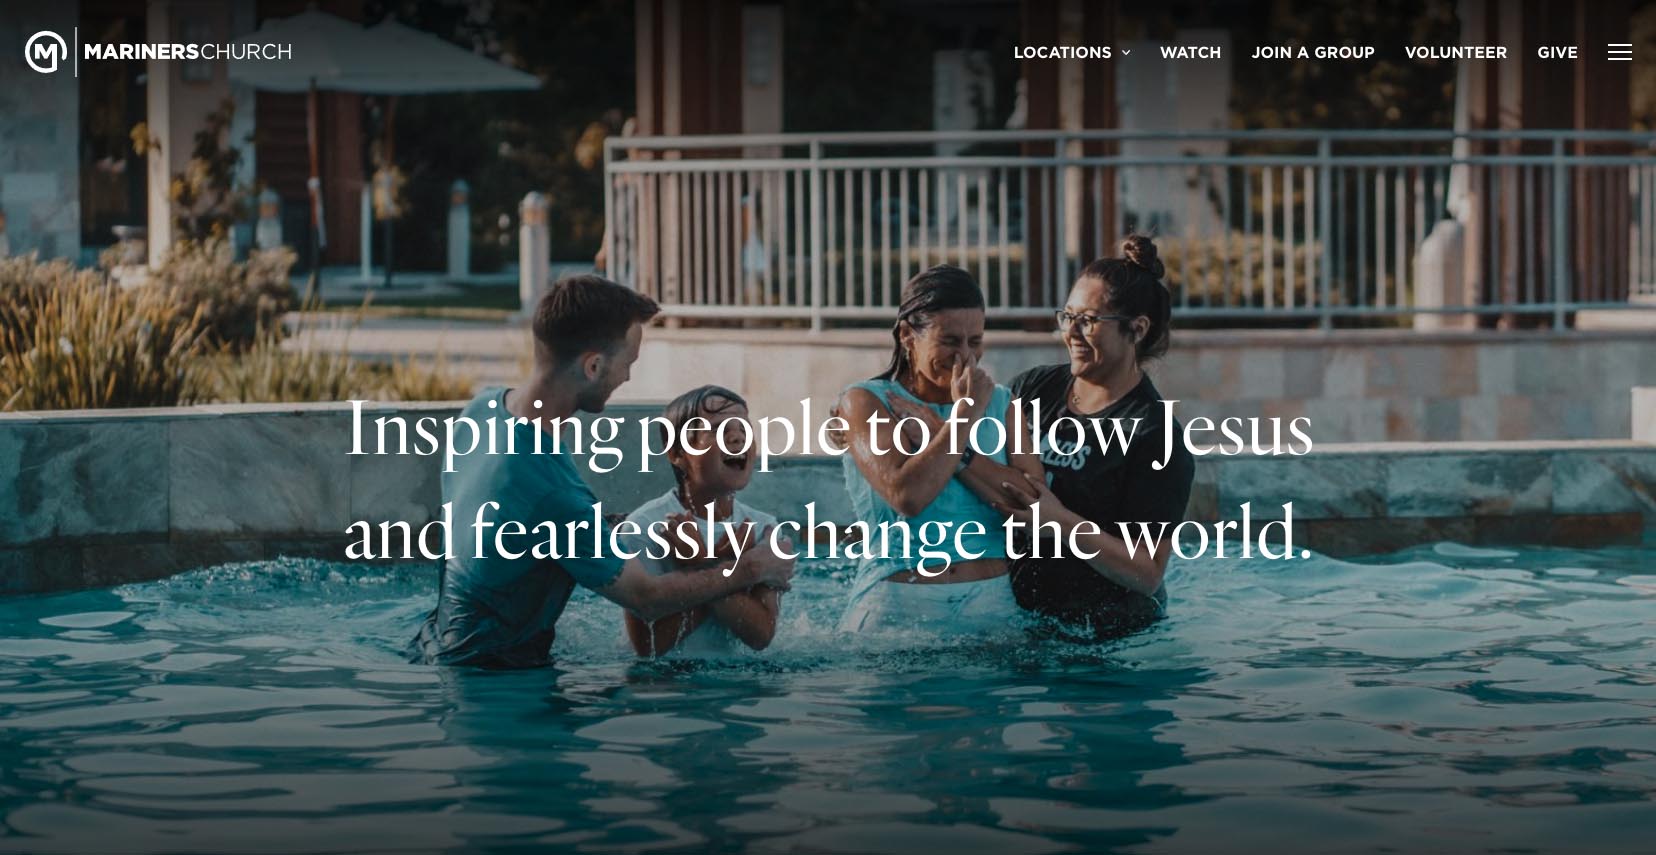 Mariners church homepage